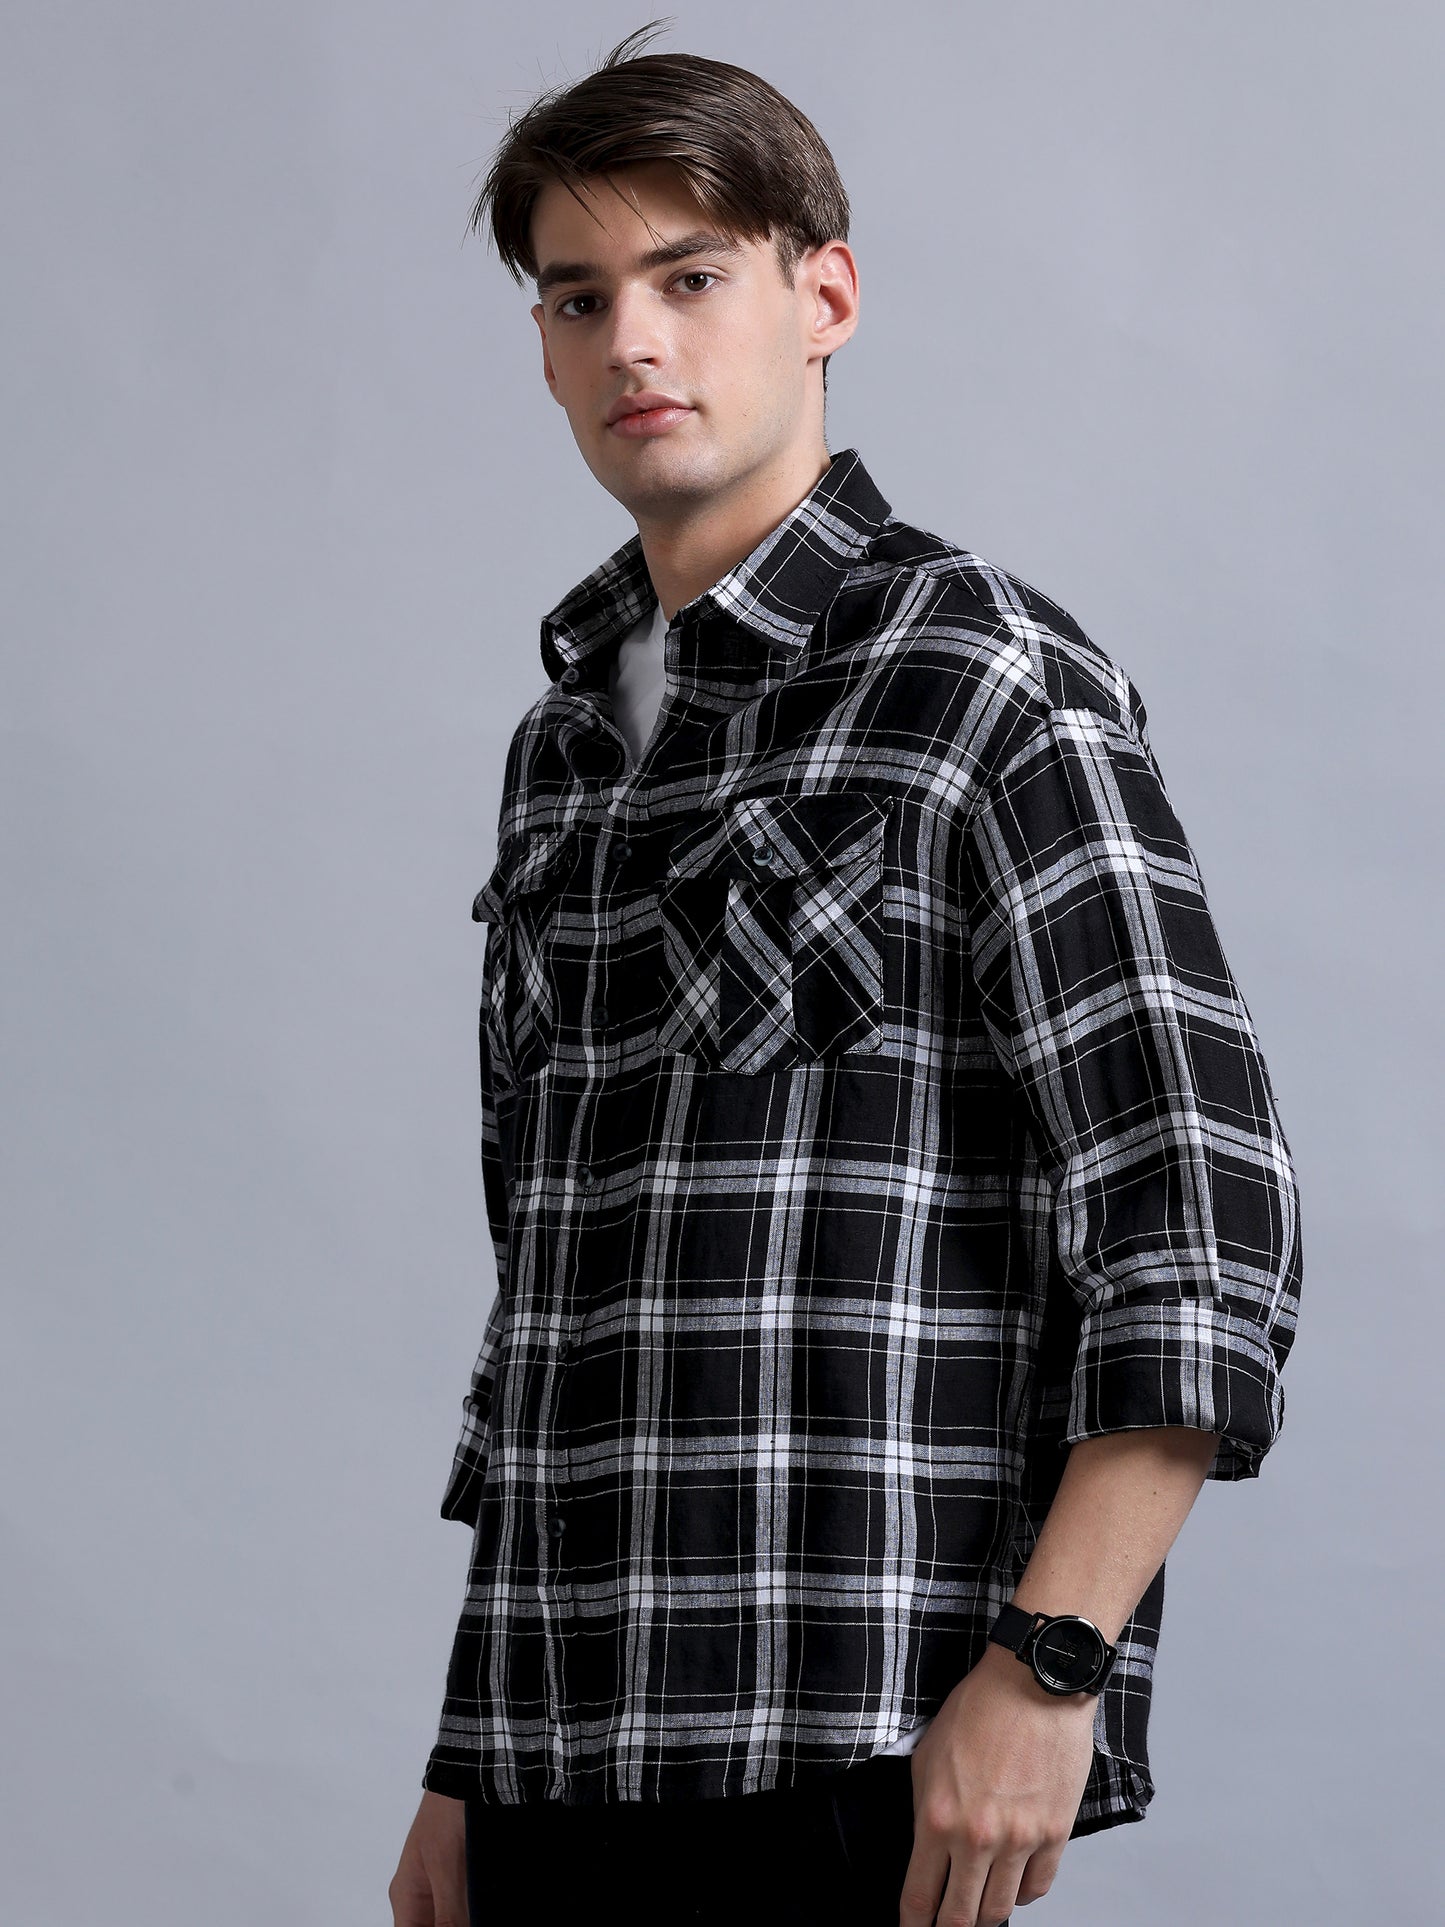 Premium Men LINEN Shirt, Relaxed Fit, Yarn Dyed Check, Full Sleeve, Black